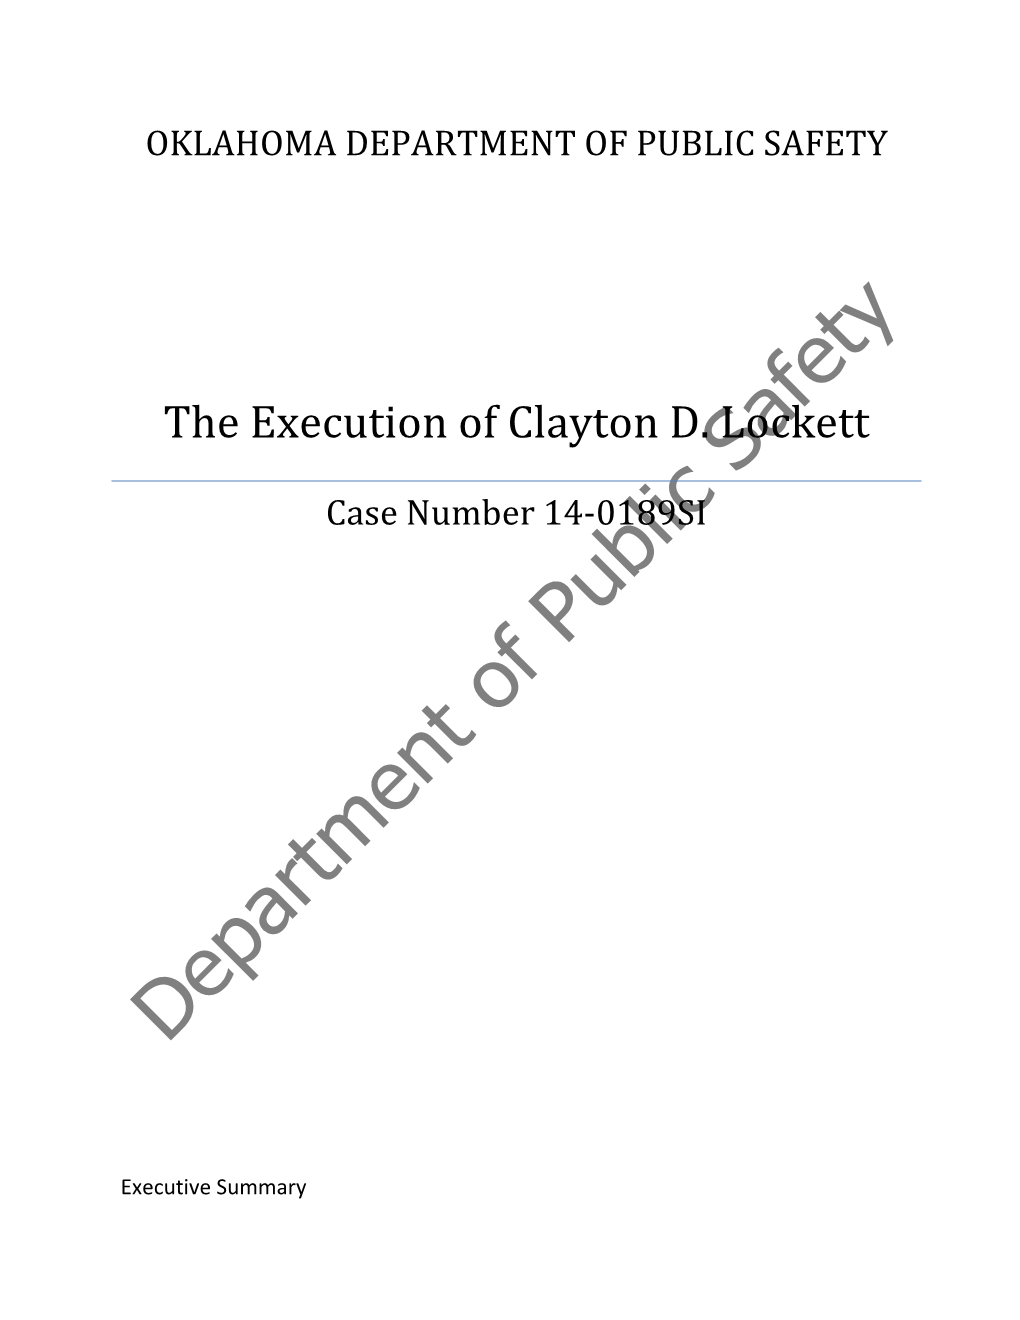 The Execution of Clayton D. Lockett